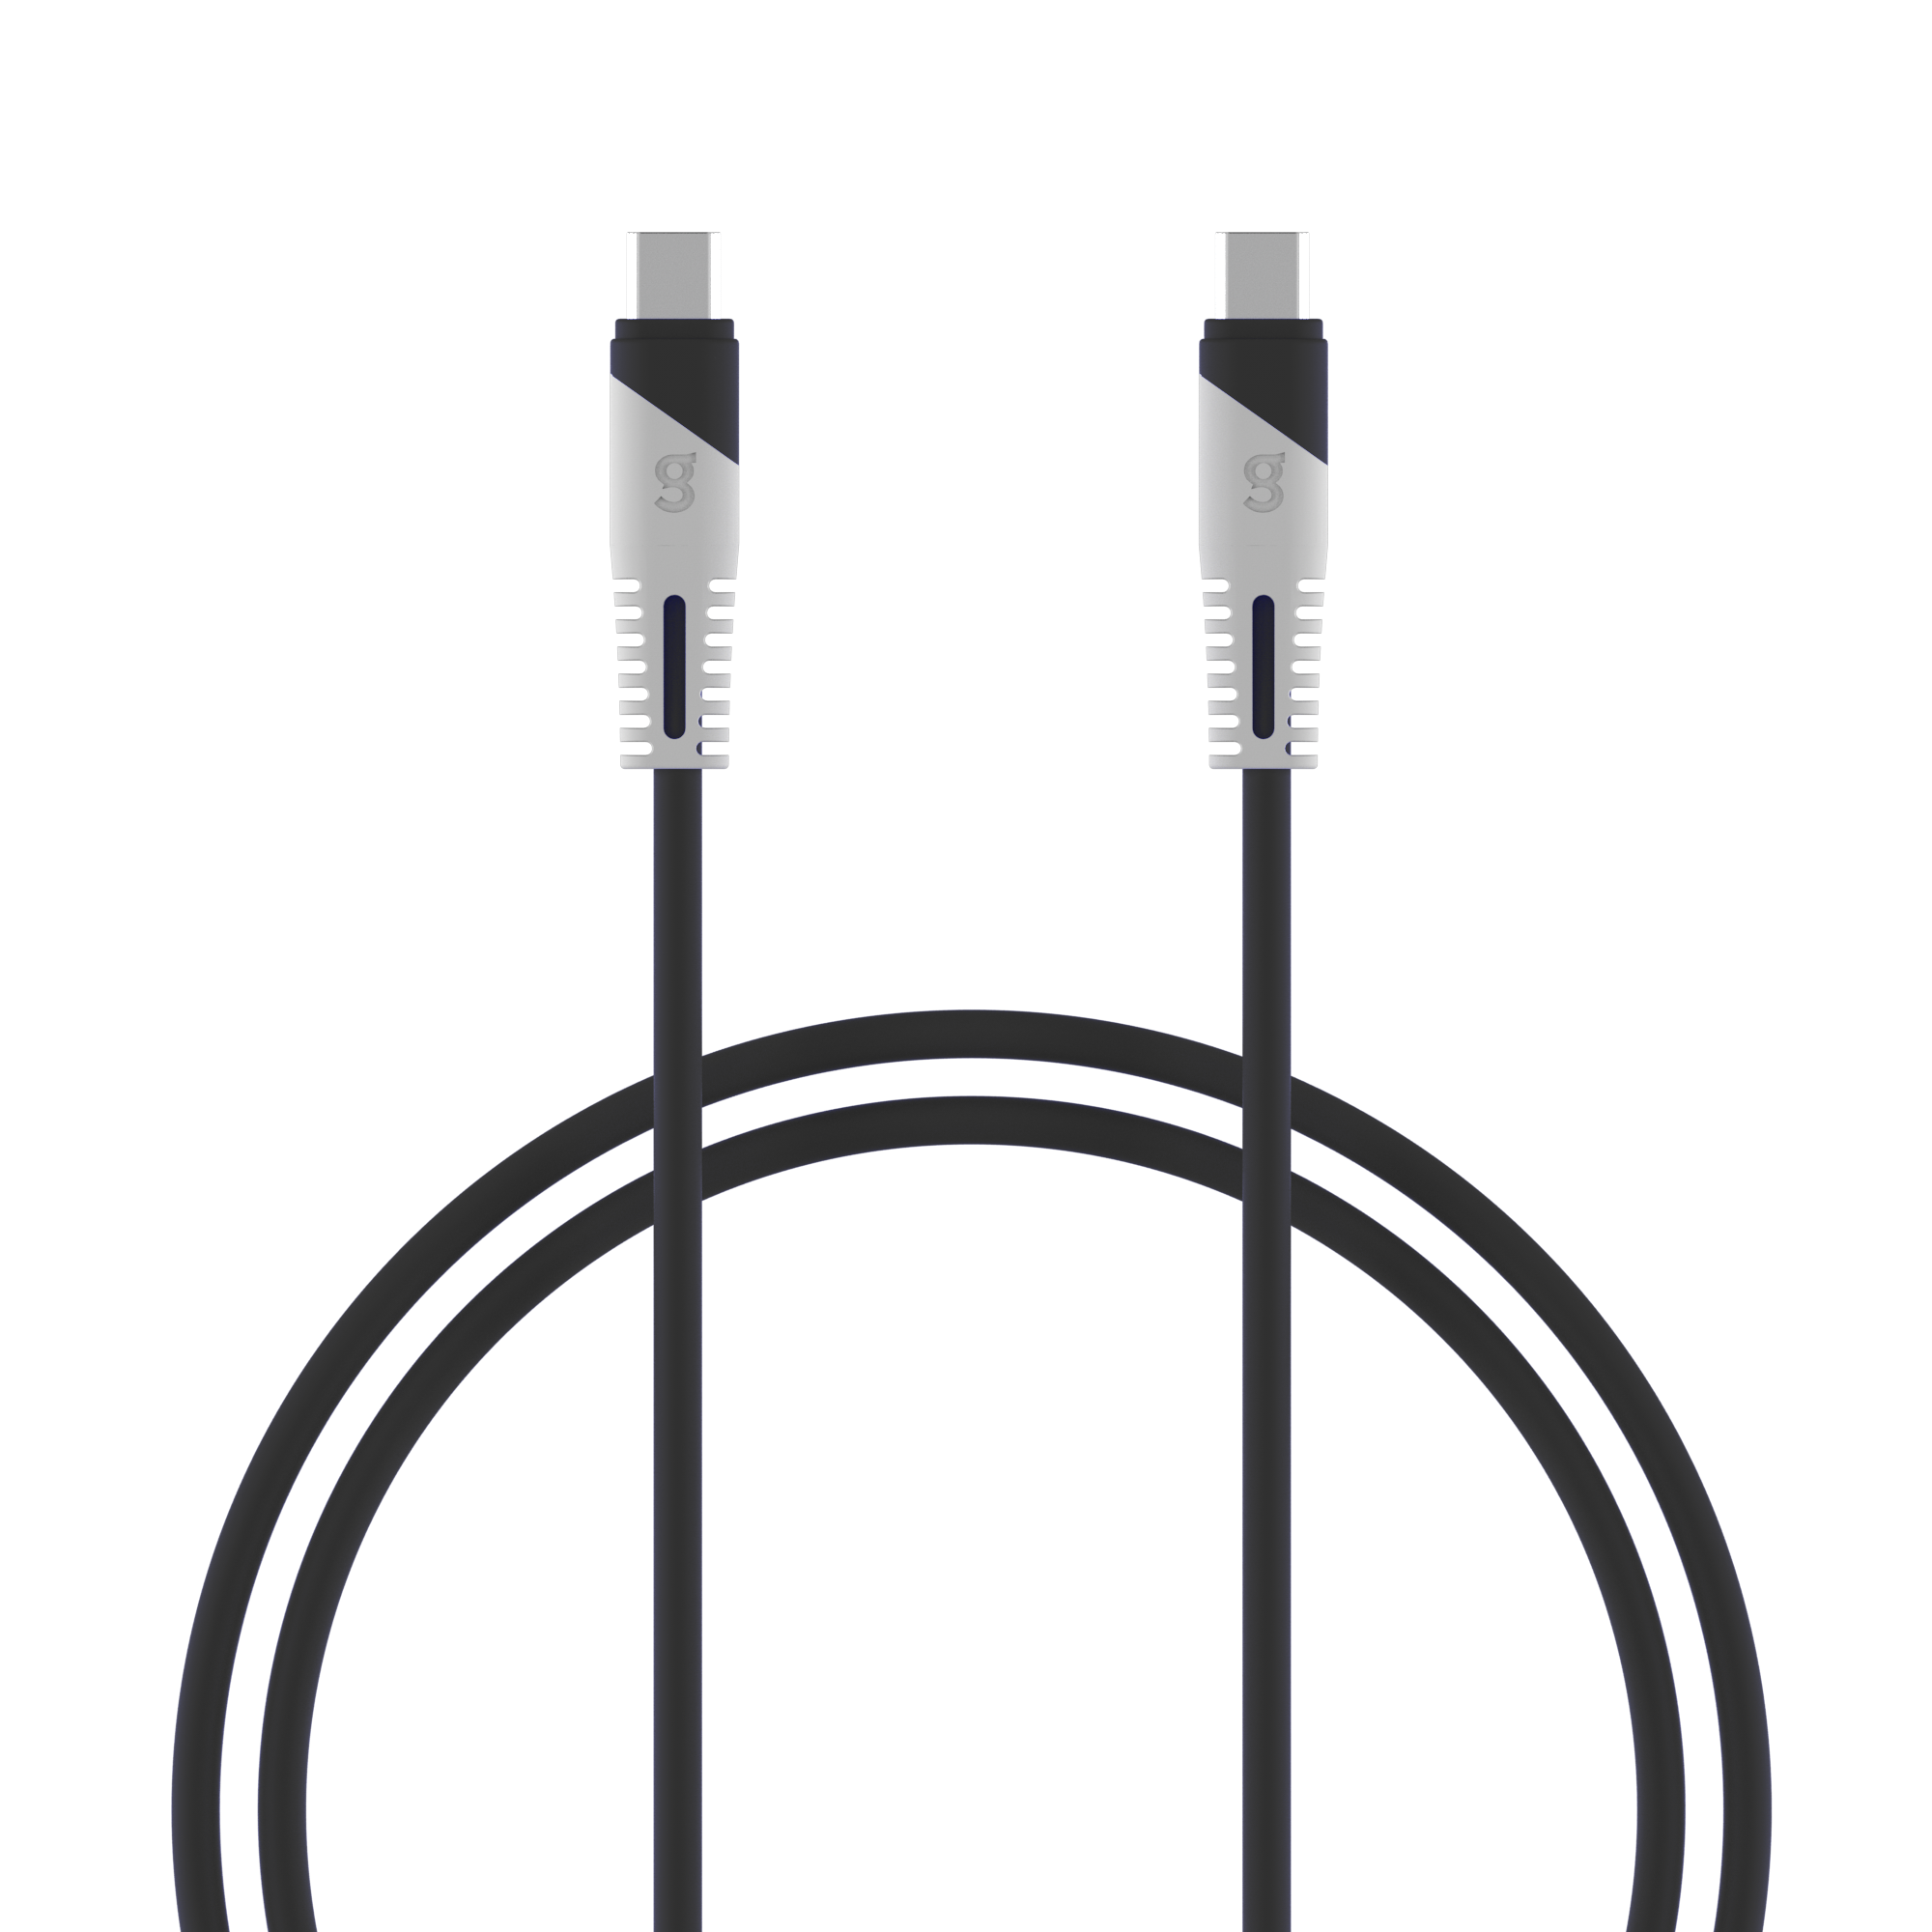 Cable USB a Lightning - Carga rápida - 3 Metros – gowin